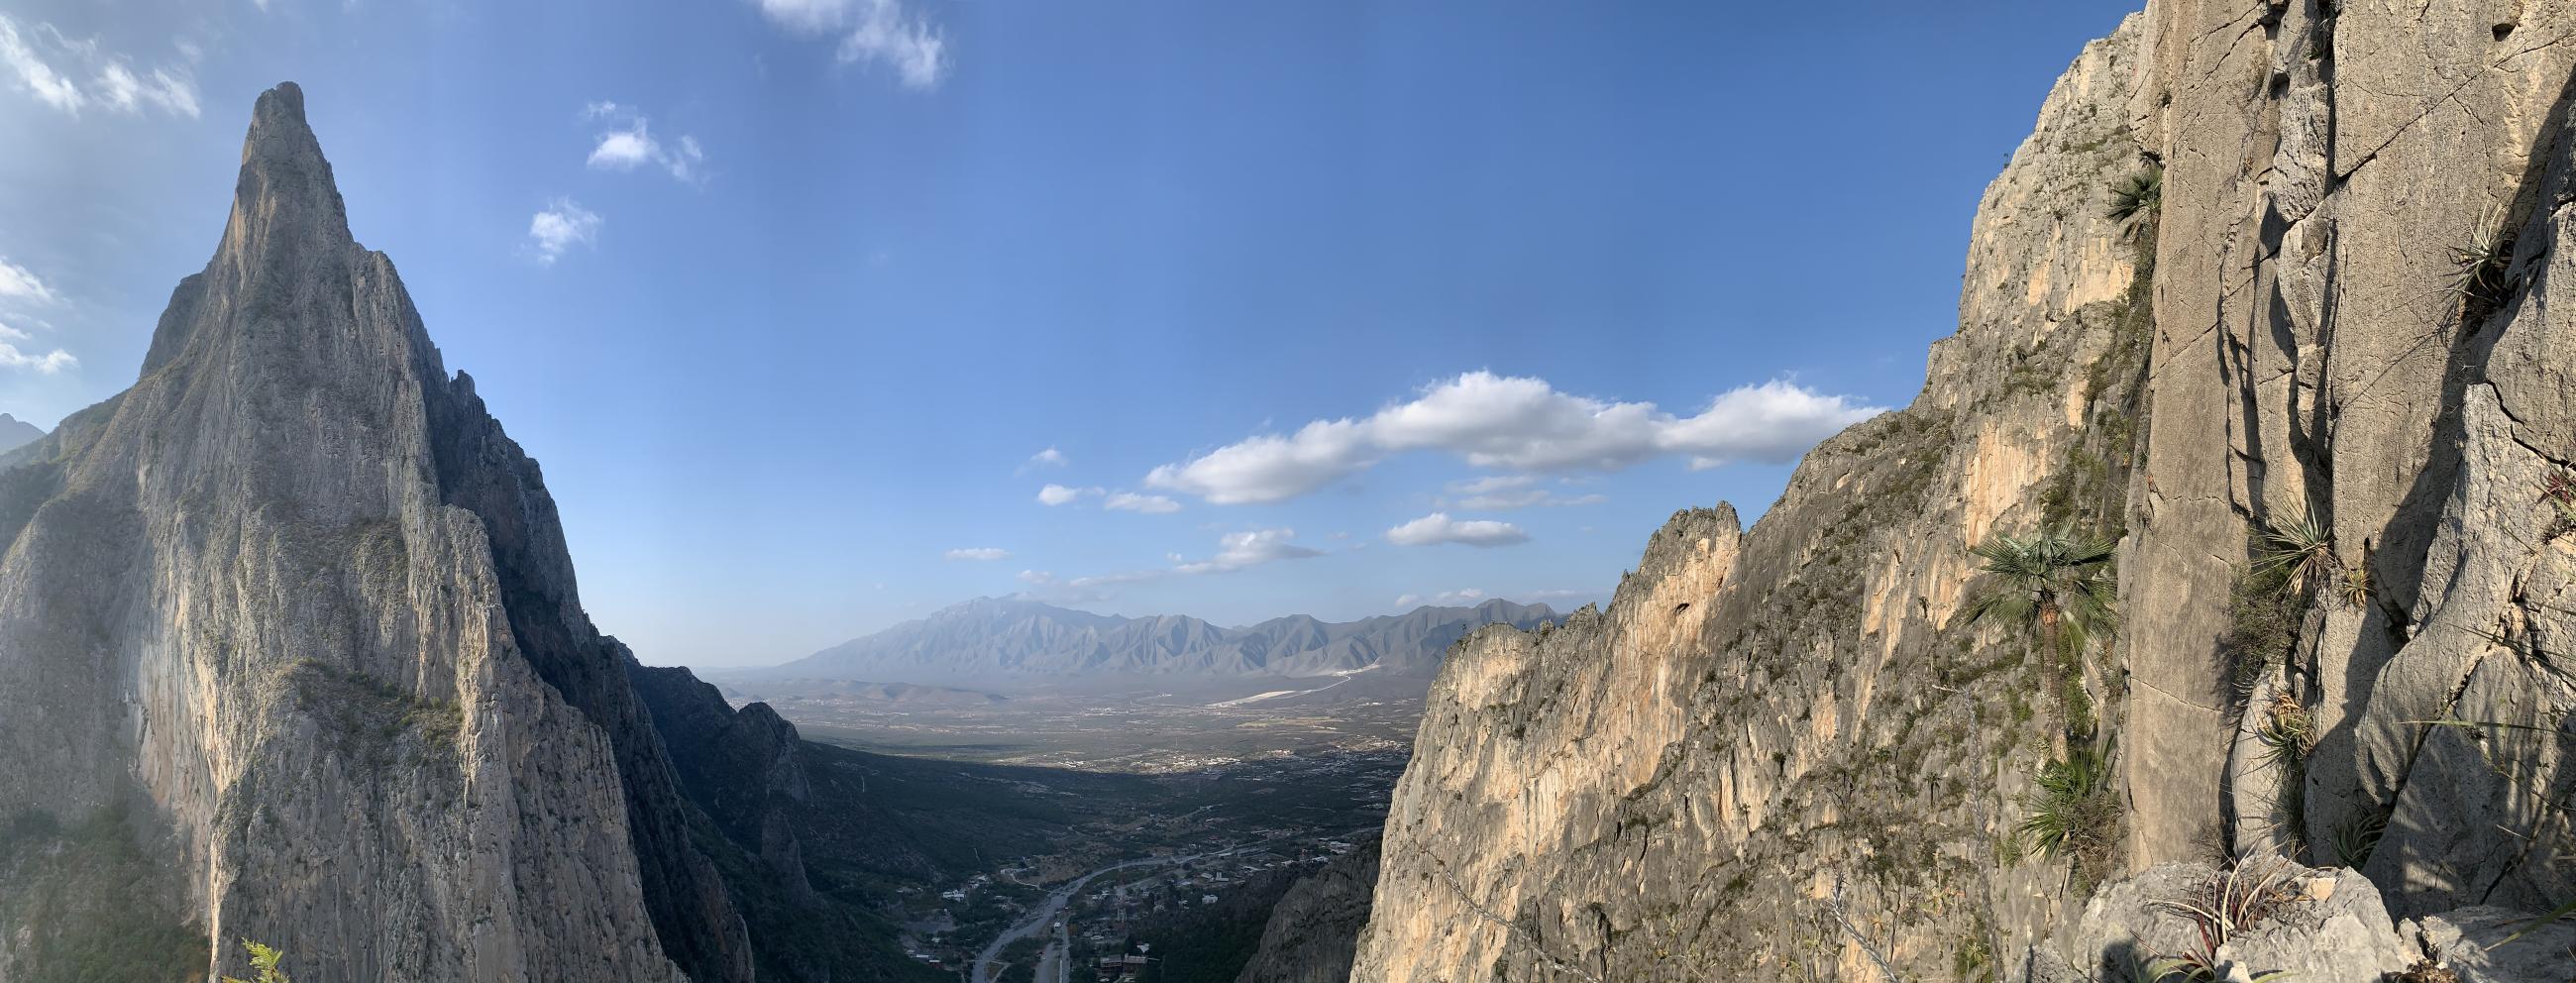 The view of Hidalgo from Treasure of Sierra Madre, a rock climb in El Potrero Chico Canyon. January 1, 2023.